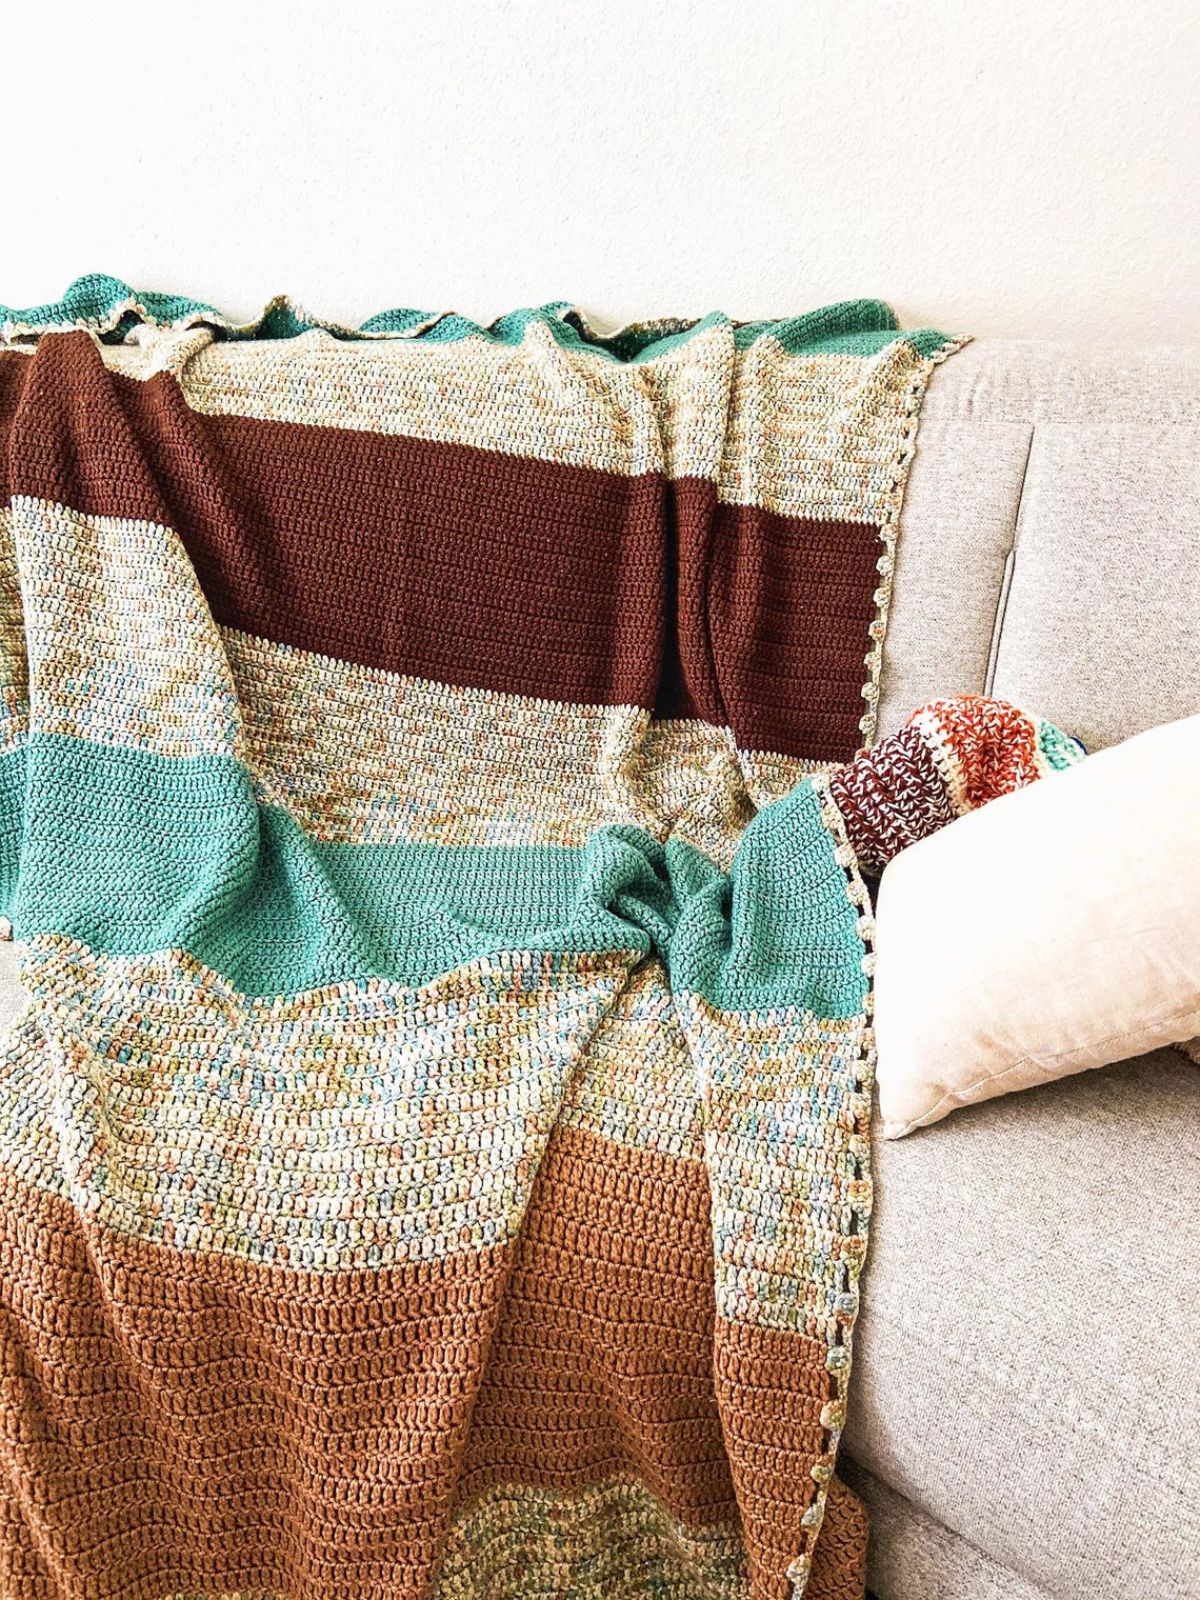 A brown, cream, orange, and blue horizontal striped crochet blanket draped over a cream sofa next to a white cushion.